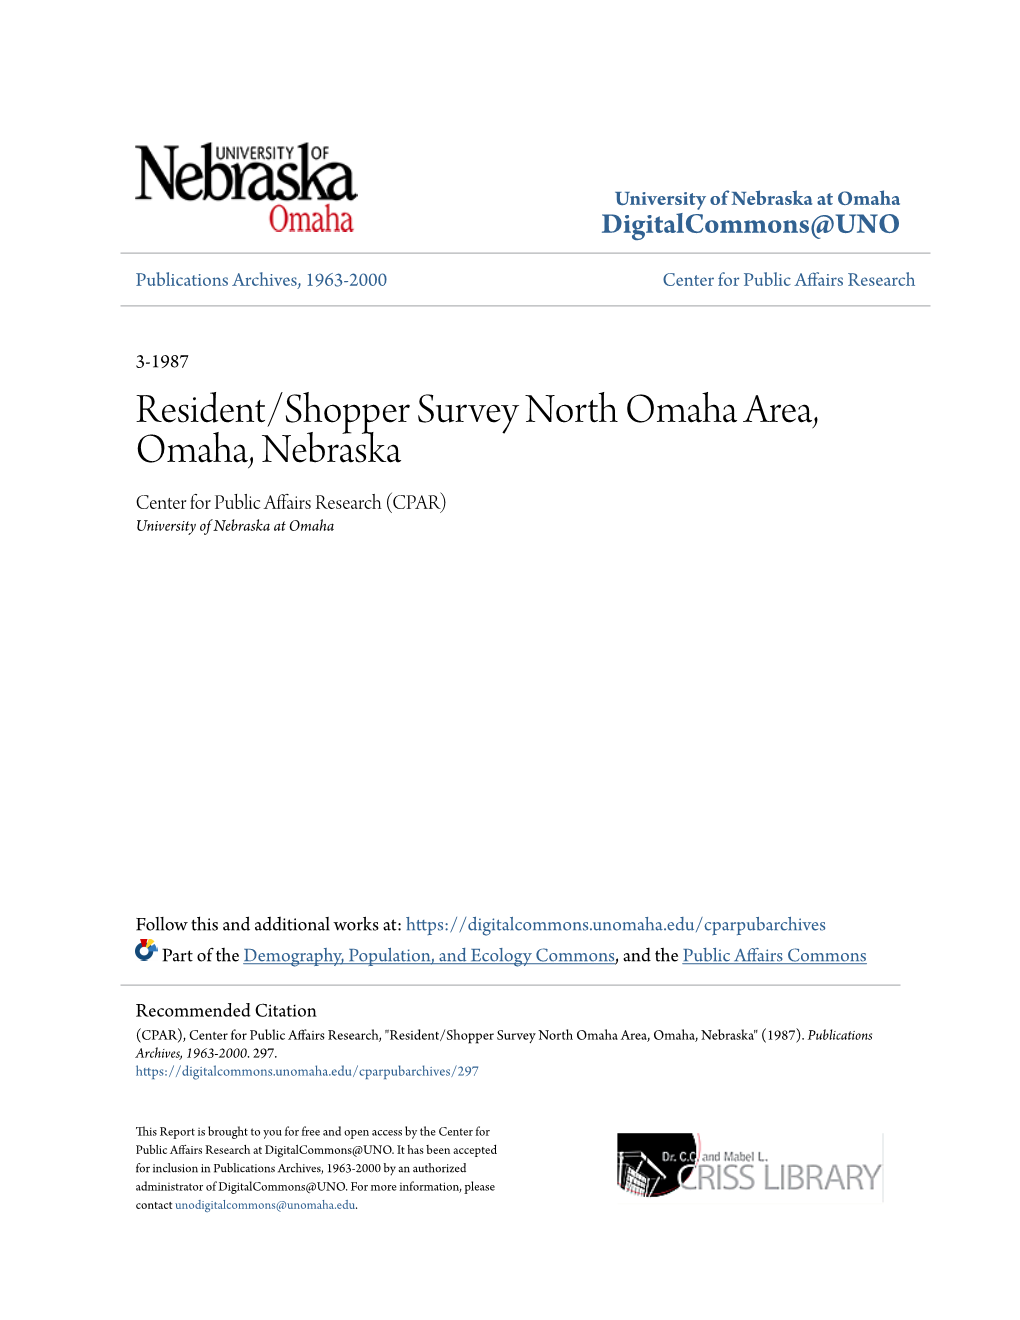 Resident/Shopper Survey North Omaha Area, Omaha, Nebraska Center for Public Affairs Research (CPAR) University of Nebraska at Omaha